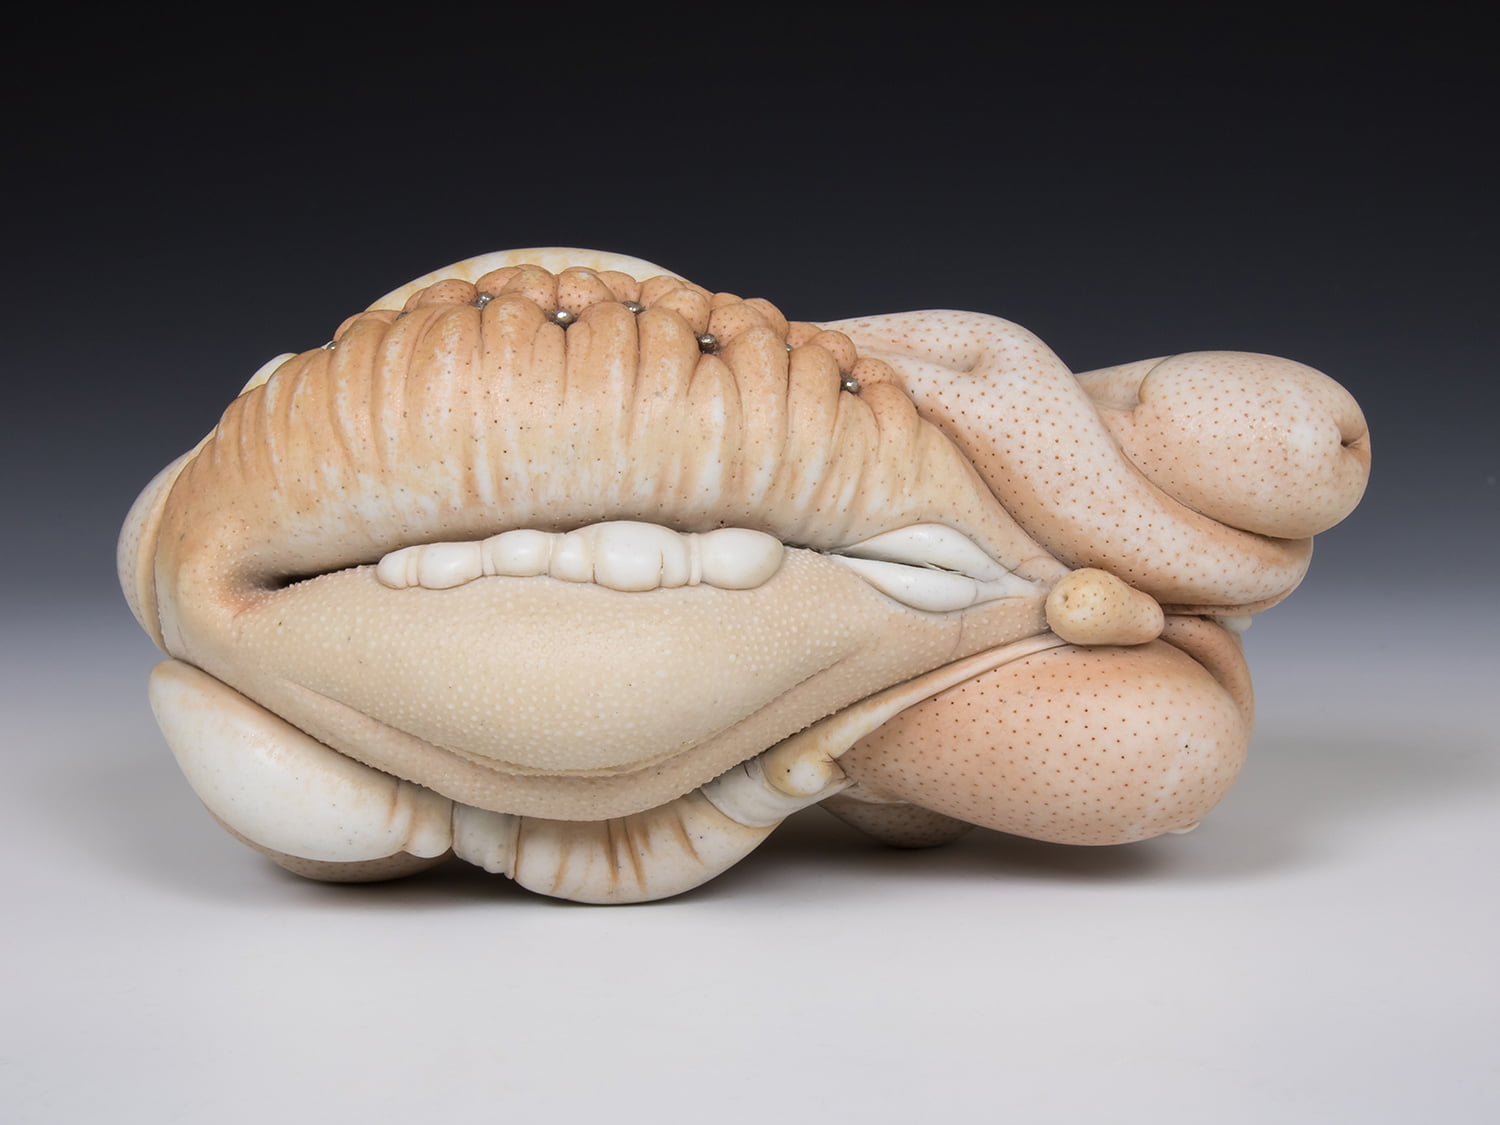 Jason Briggs "Tera" (alternate view 2). porcelain, hair, and mixed media sculpture ceramics.